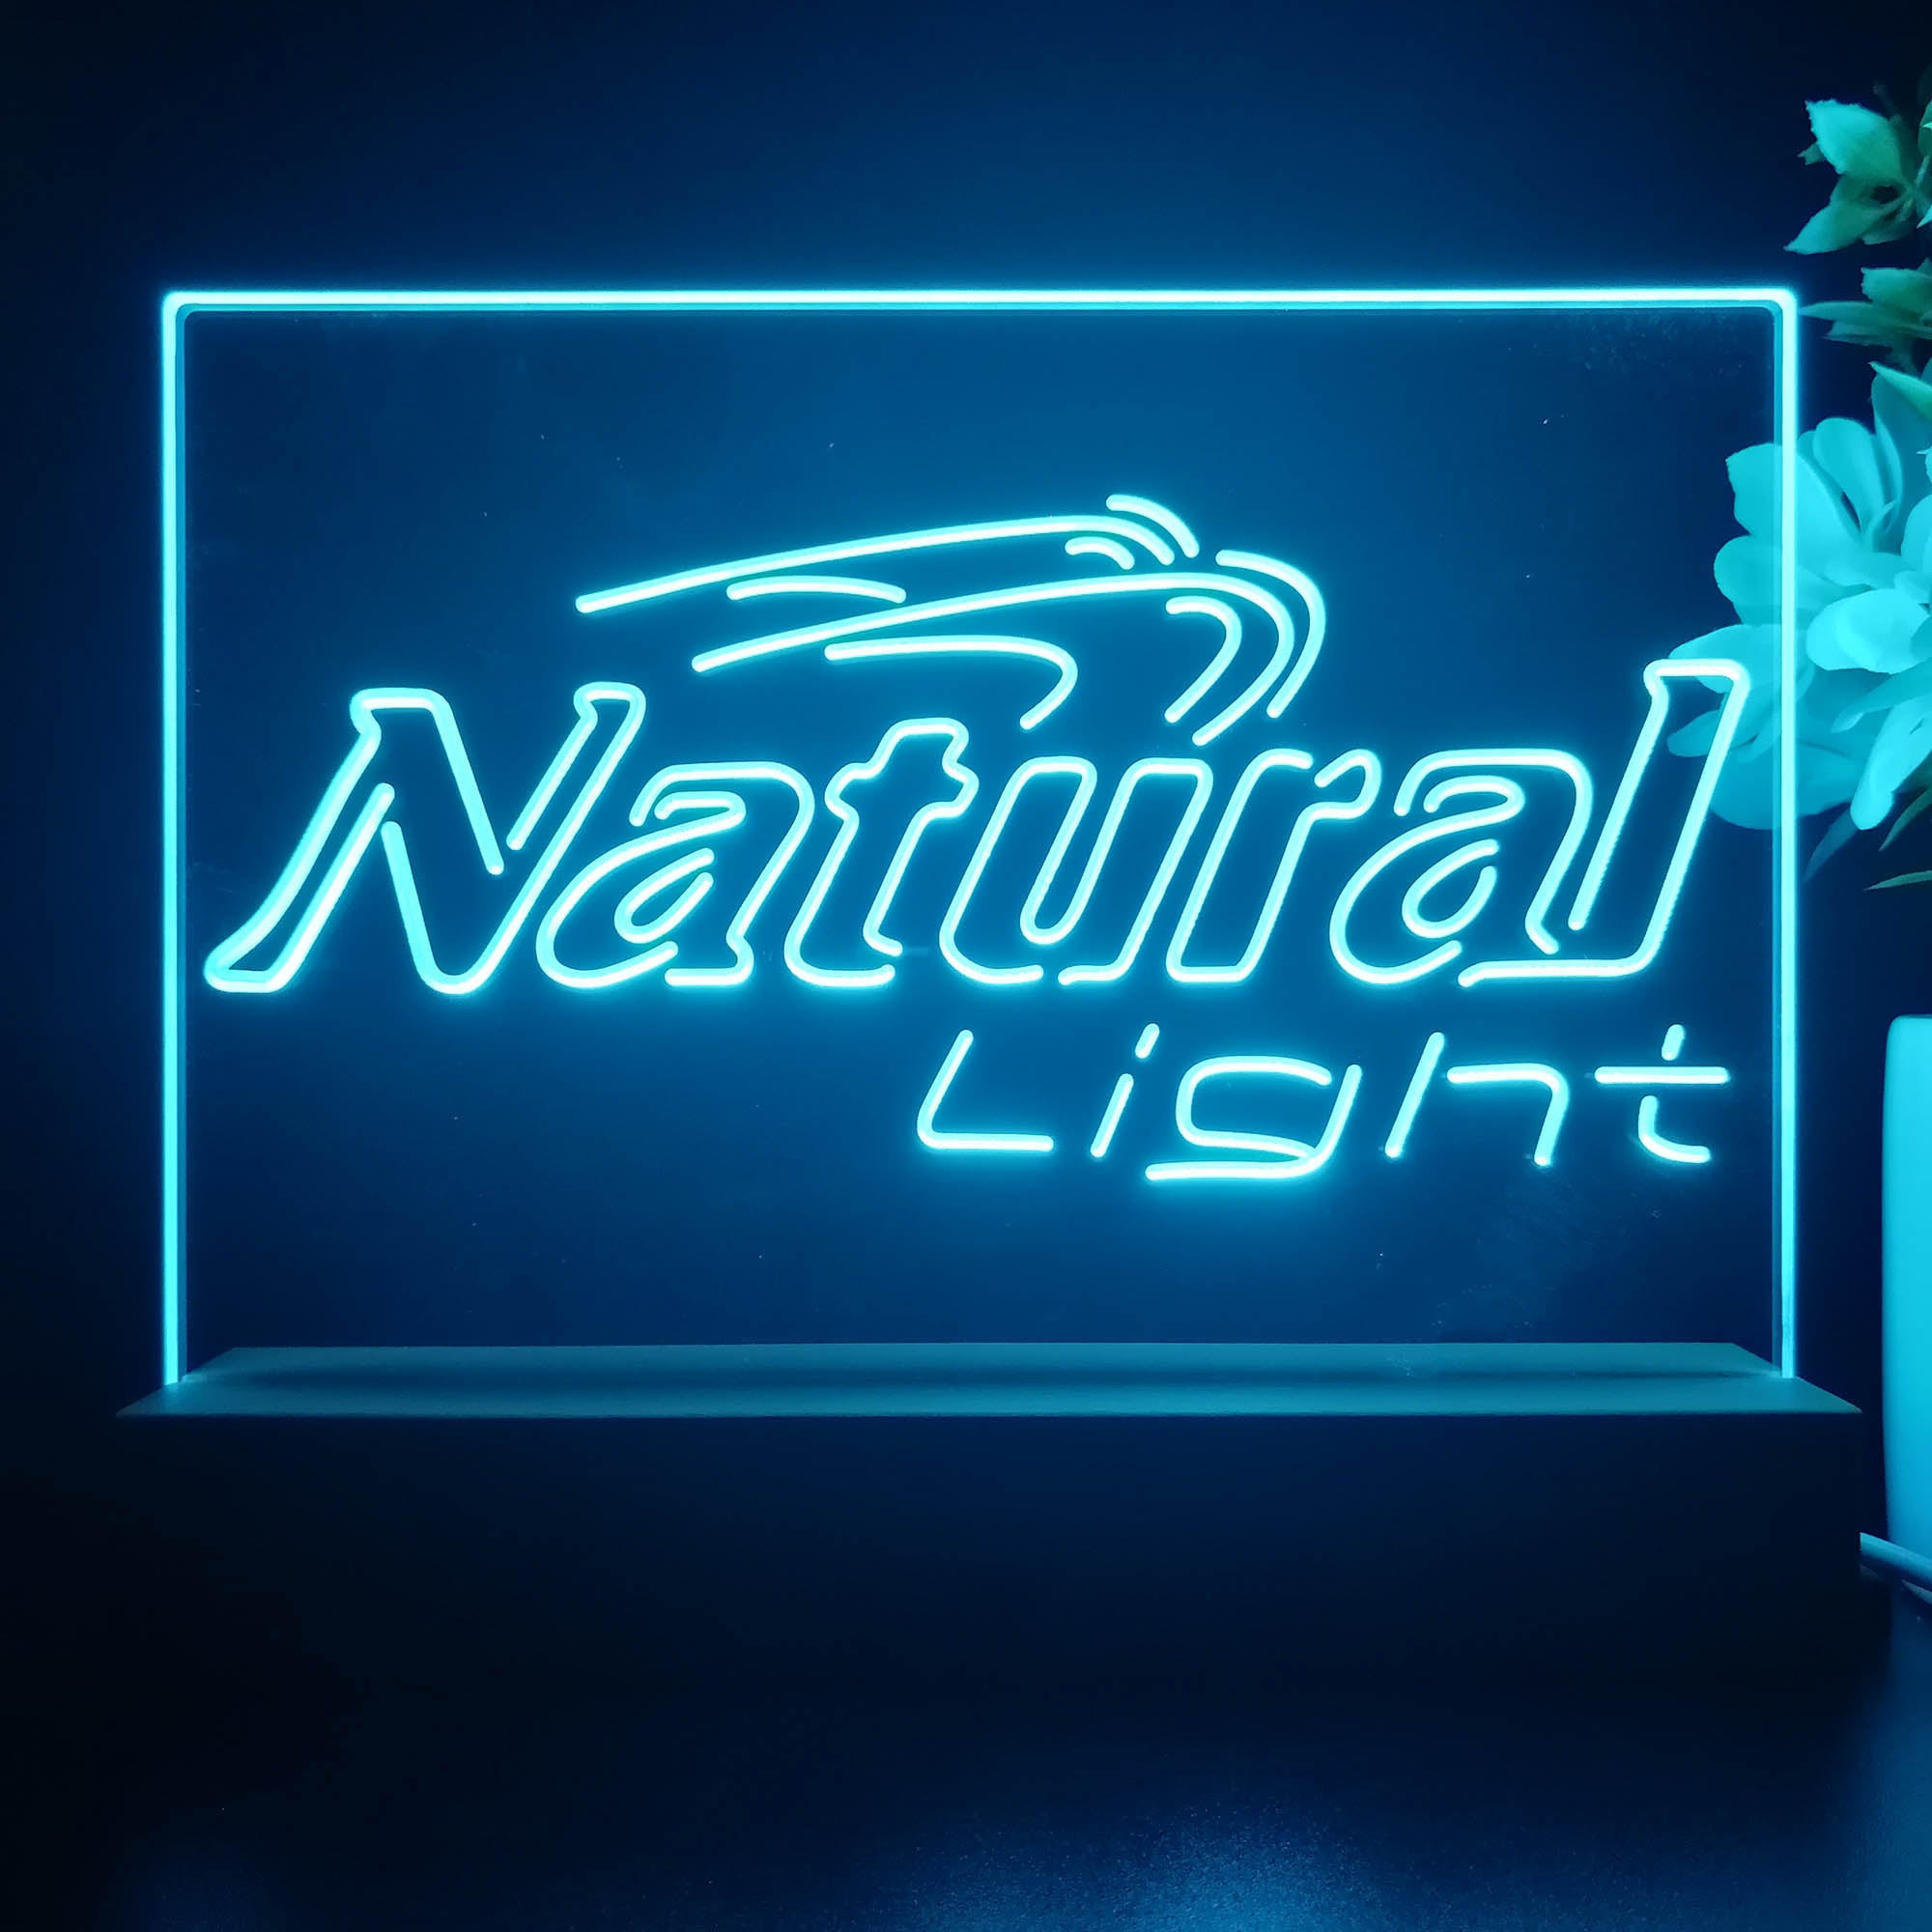 Natural Light Beer Bar Gift Neon Sign Pub Bar Lamp